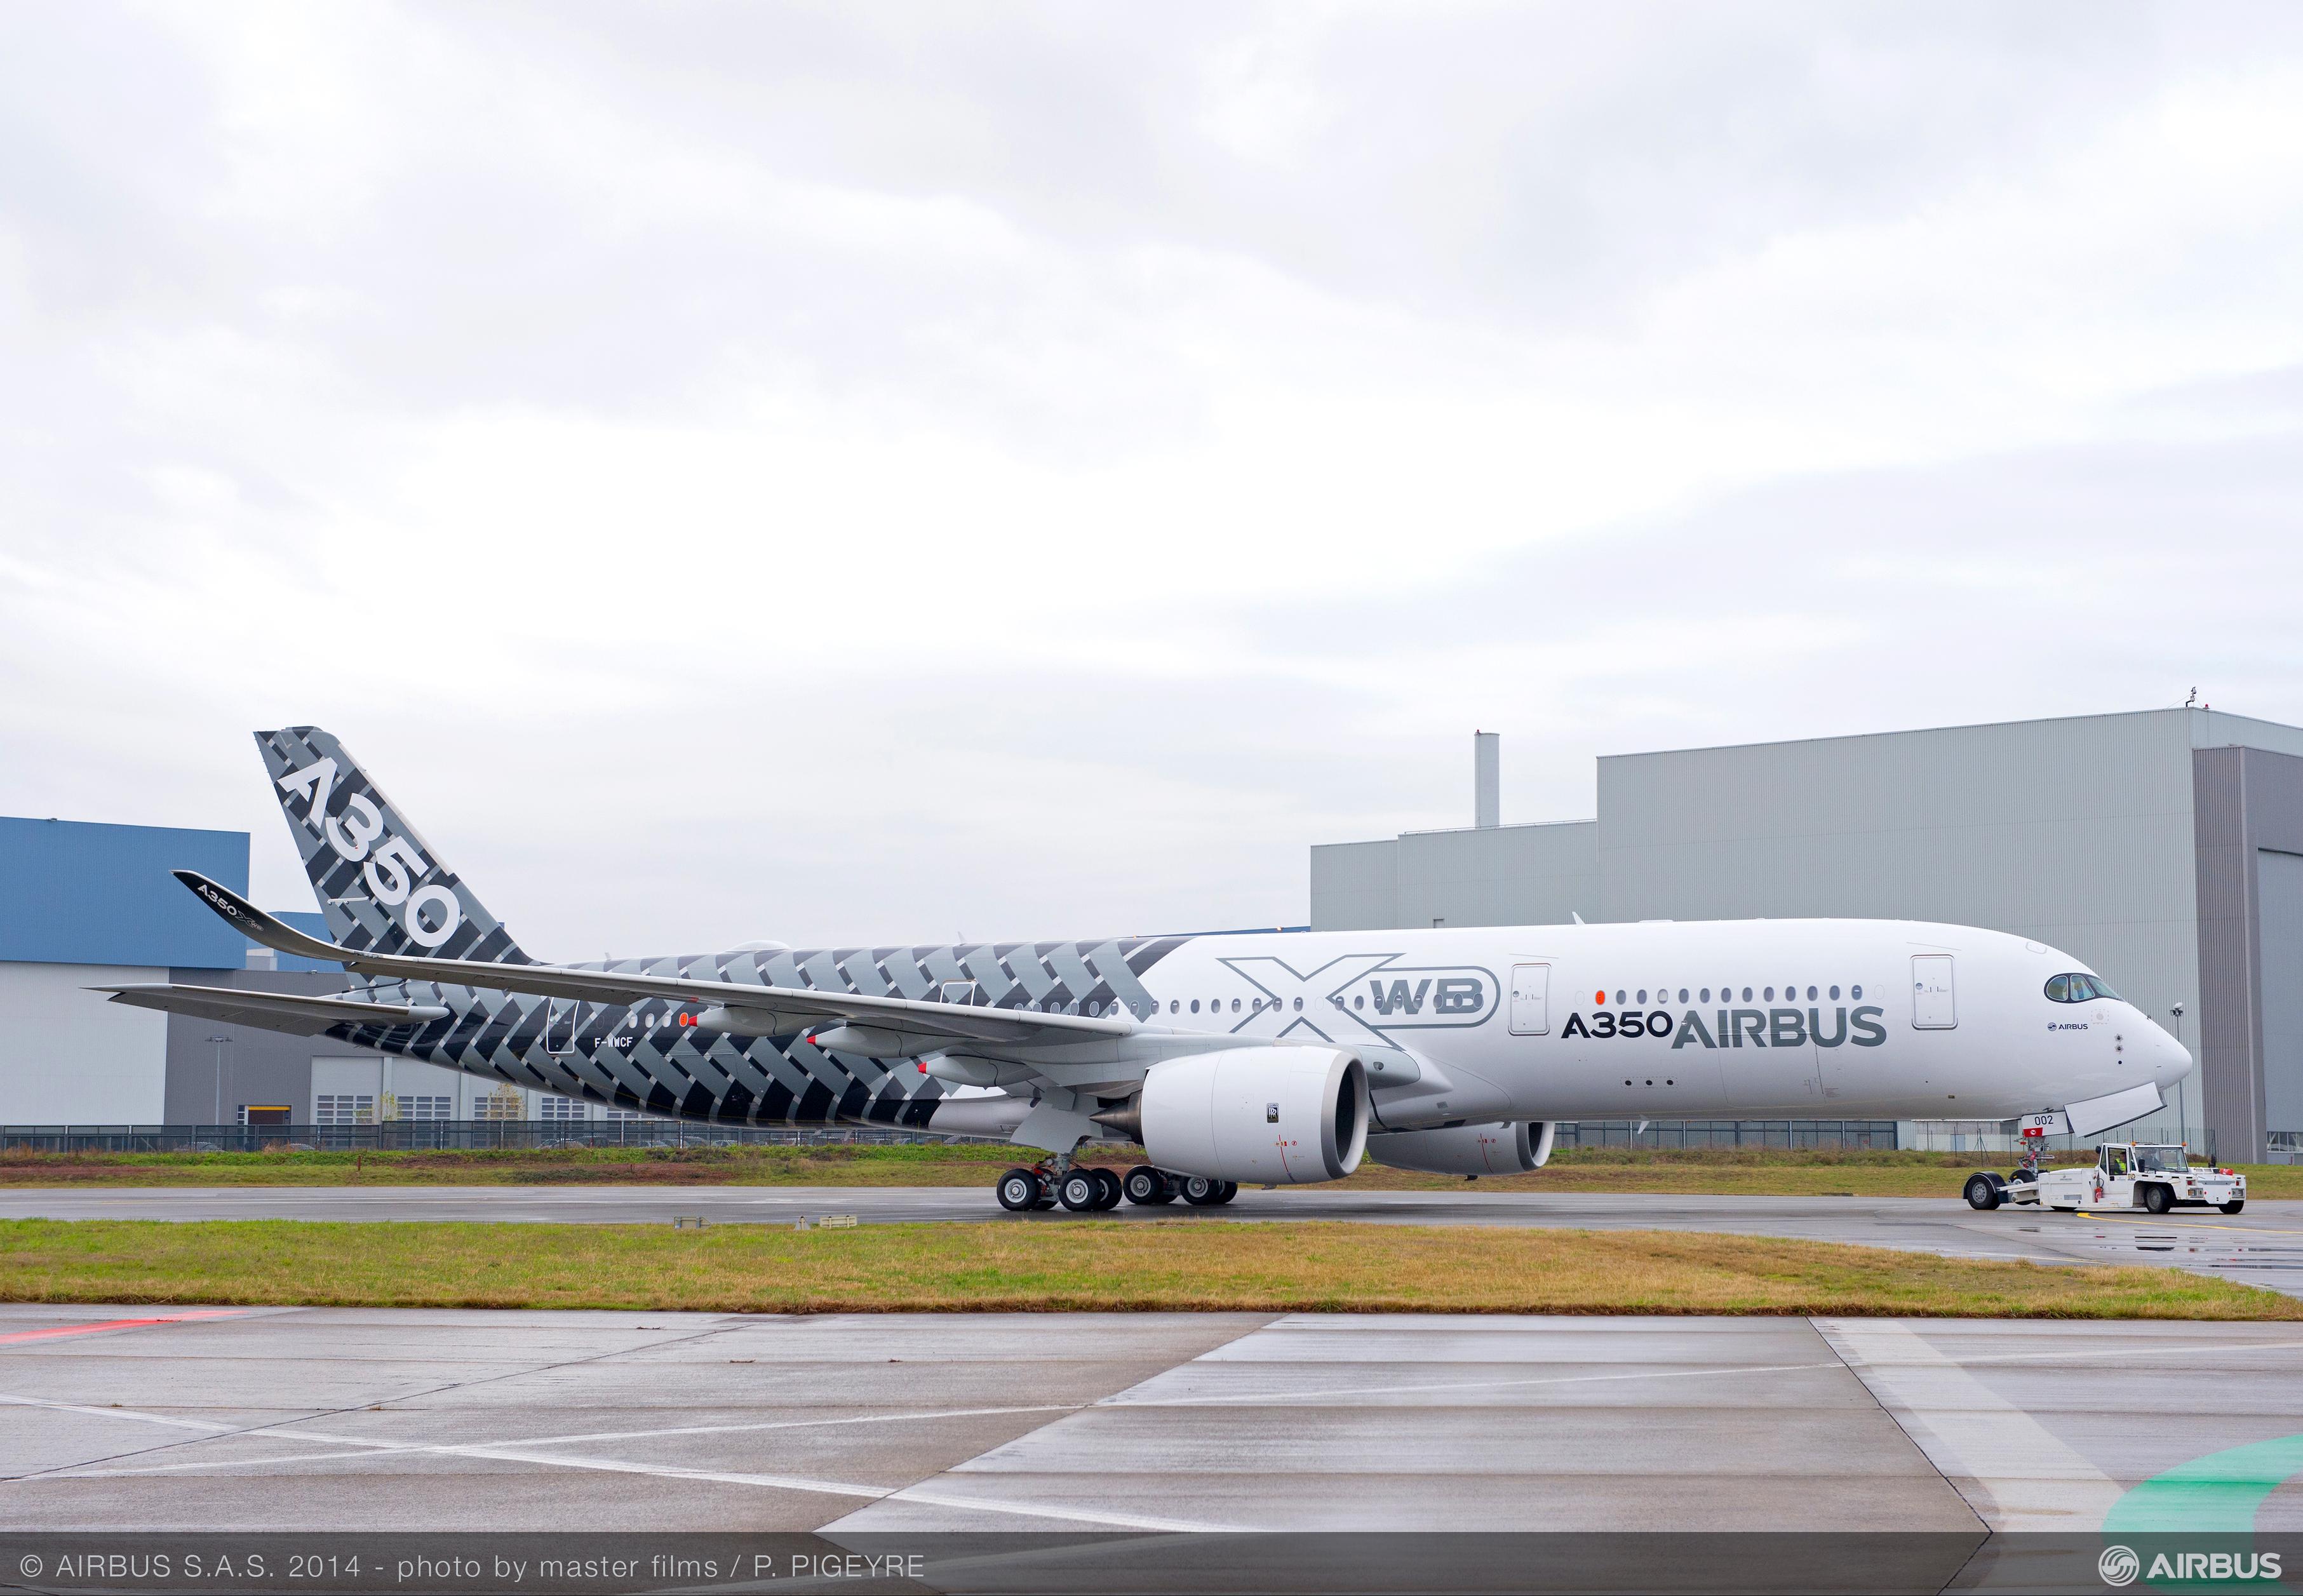 Airbus A350 XWB Carbon Livery Aeroplane Plane Model Prototype LED 47cm 18” 1:160 